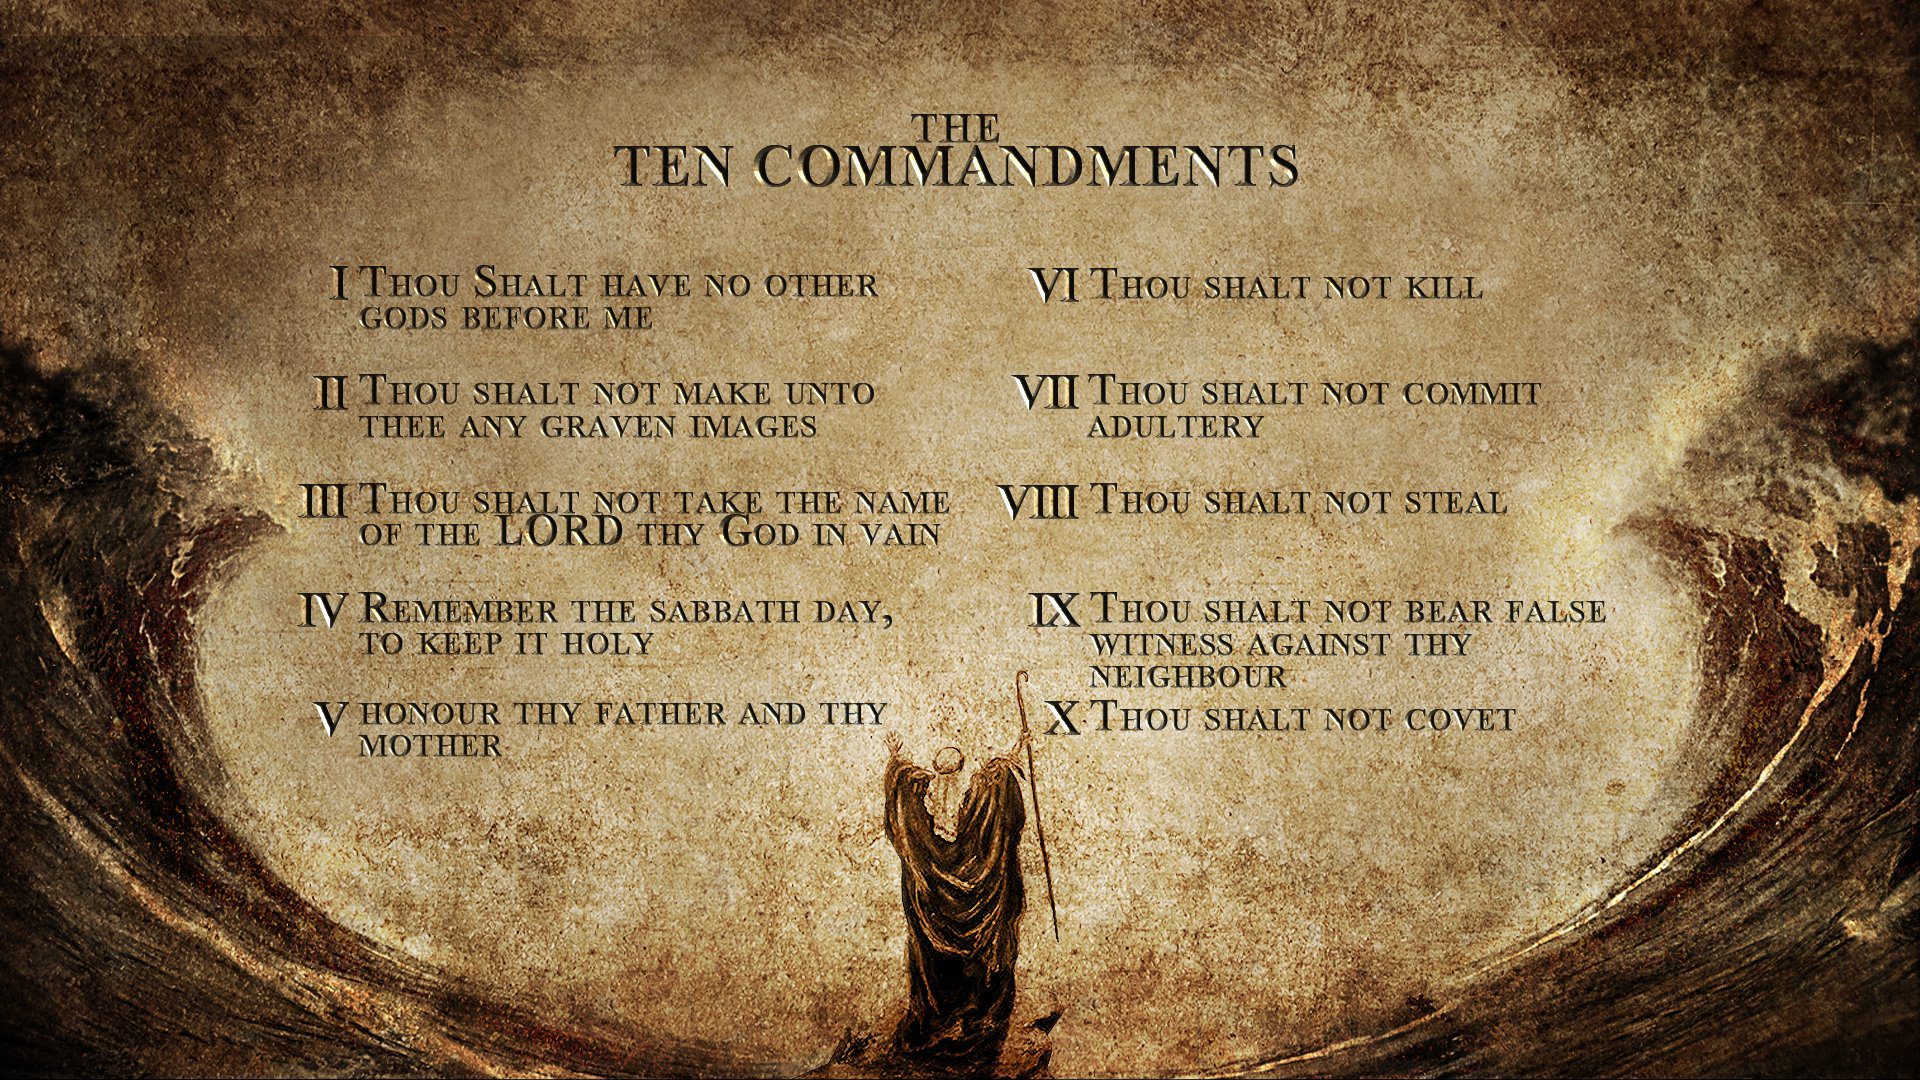 phoenix tempe encomix webninja 10 commandments wallpaper - Ten Commandments Wallpapers